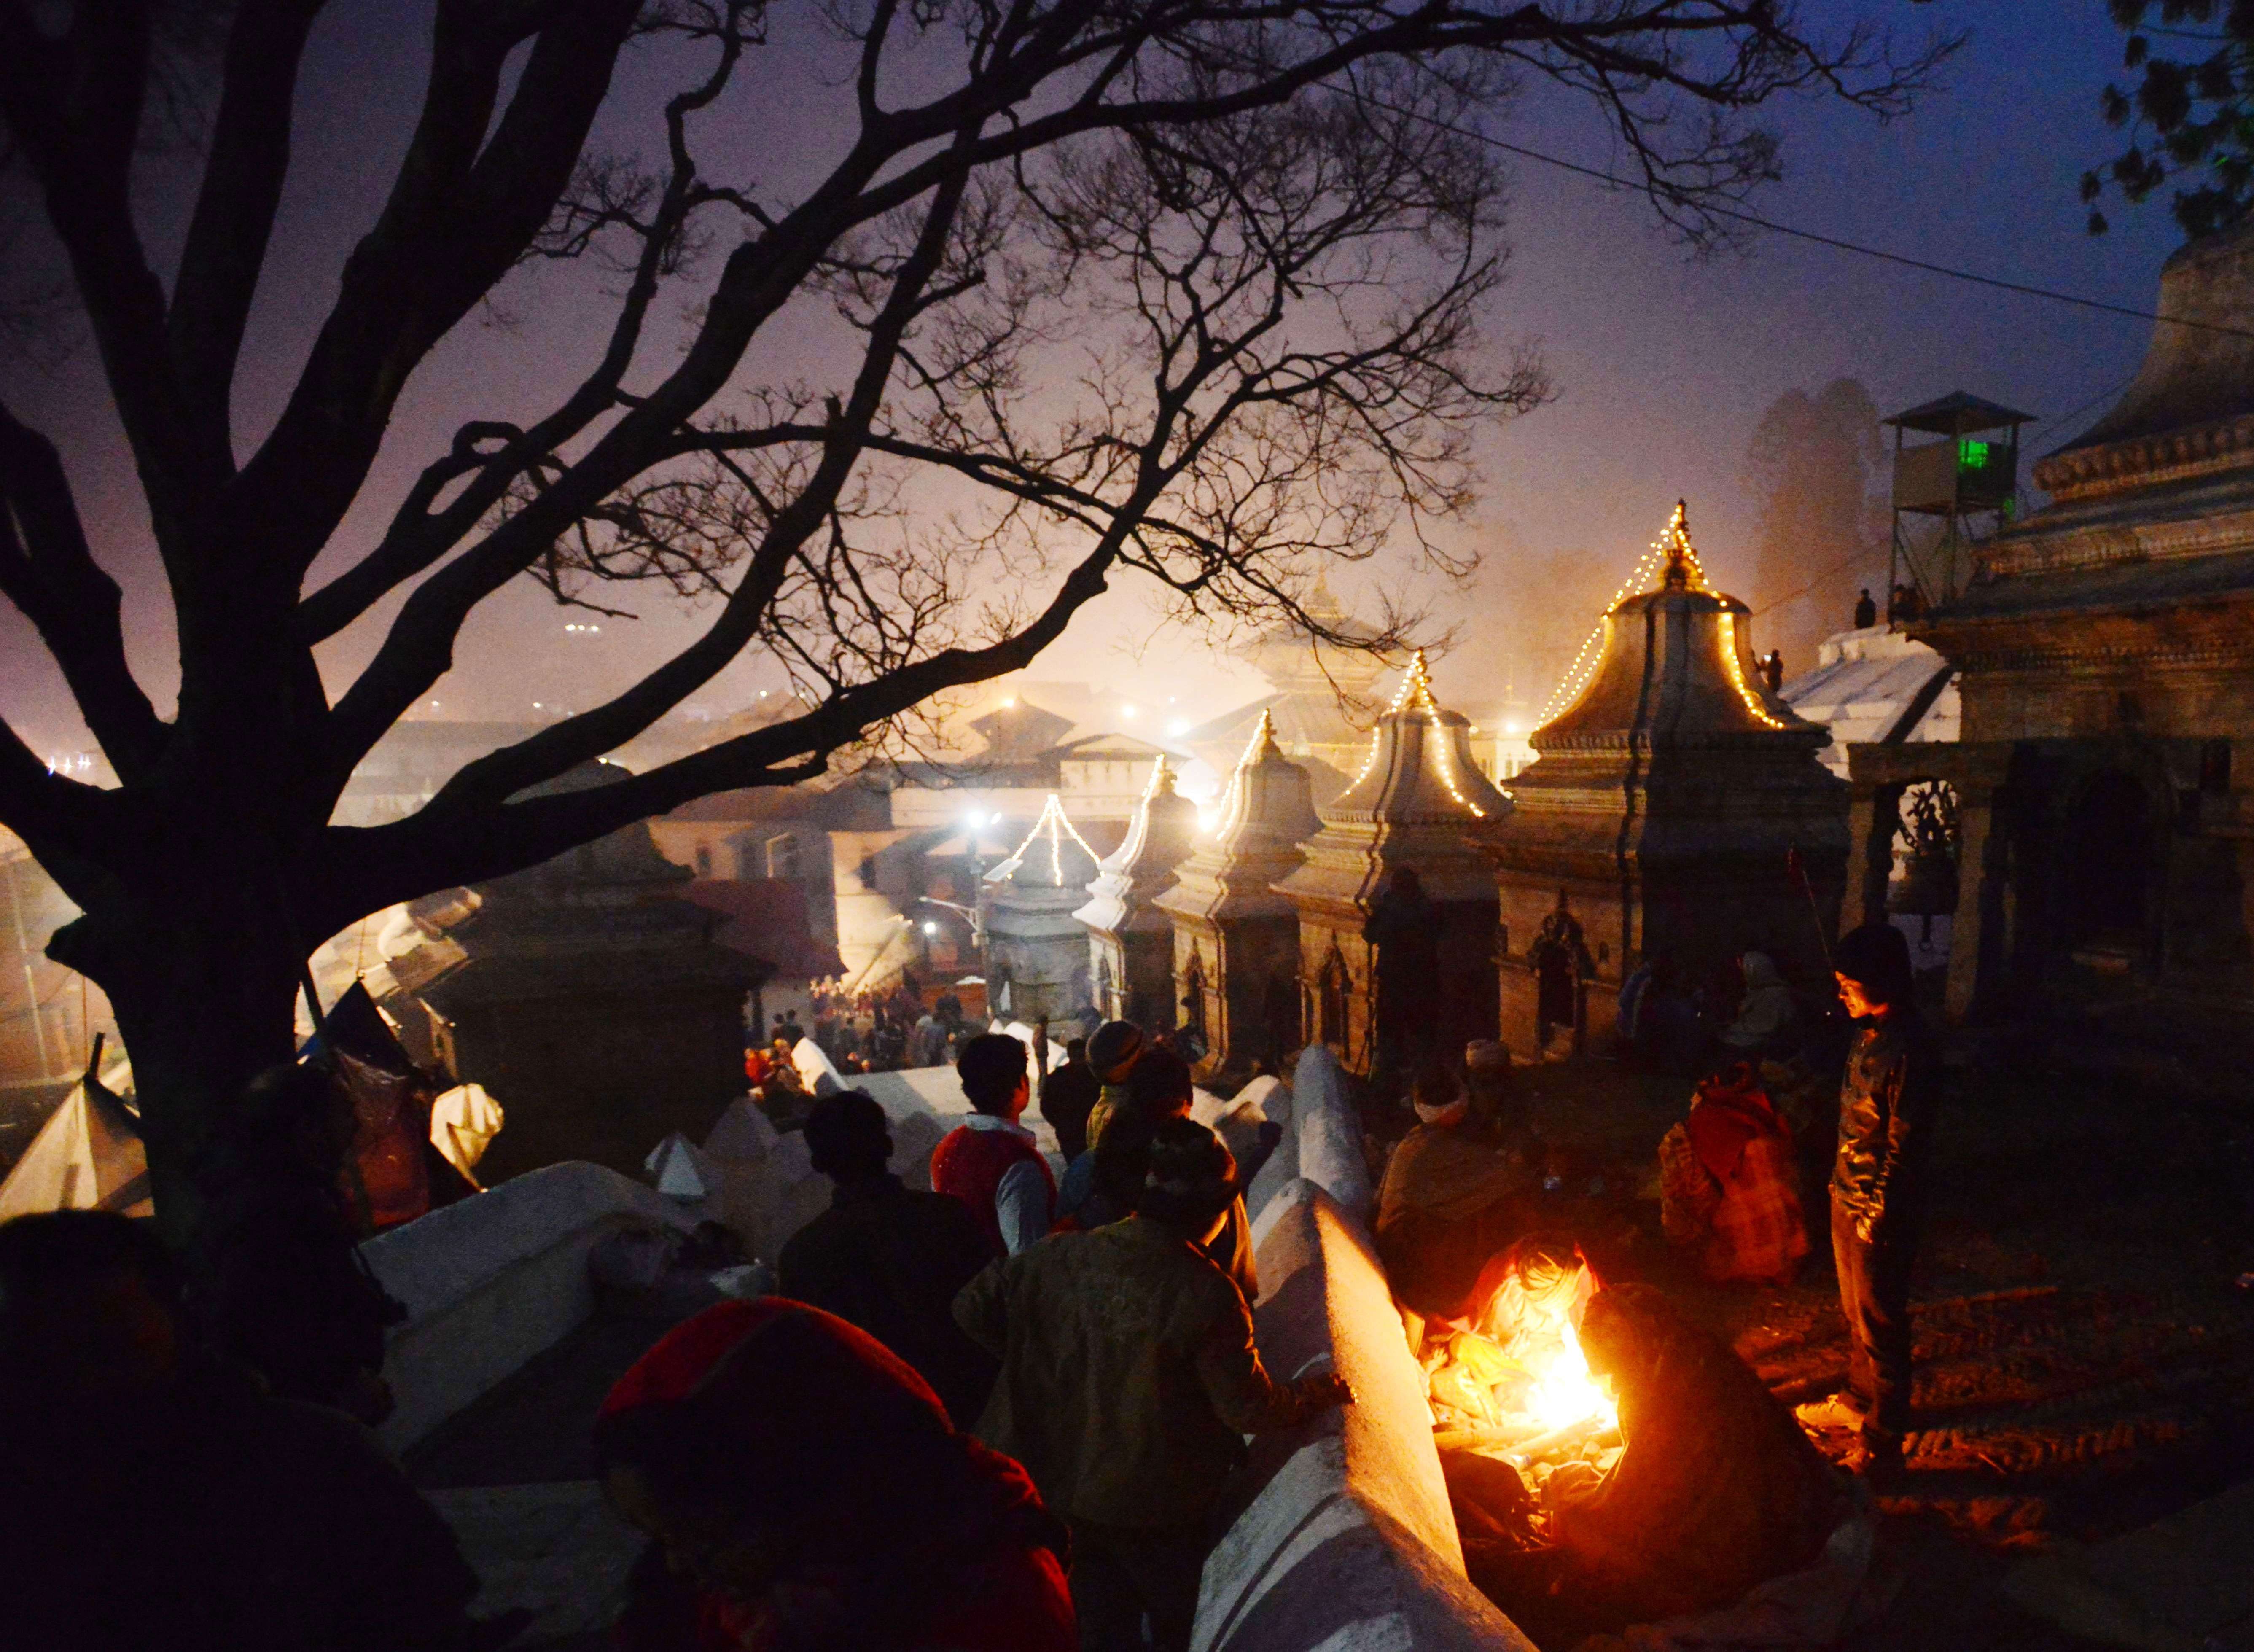 Worshippers warm themselves near a fire during the Maha Shivaratri festival in Kathmandu. (AFP PHOTO / PRAKASH MATHEMA)